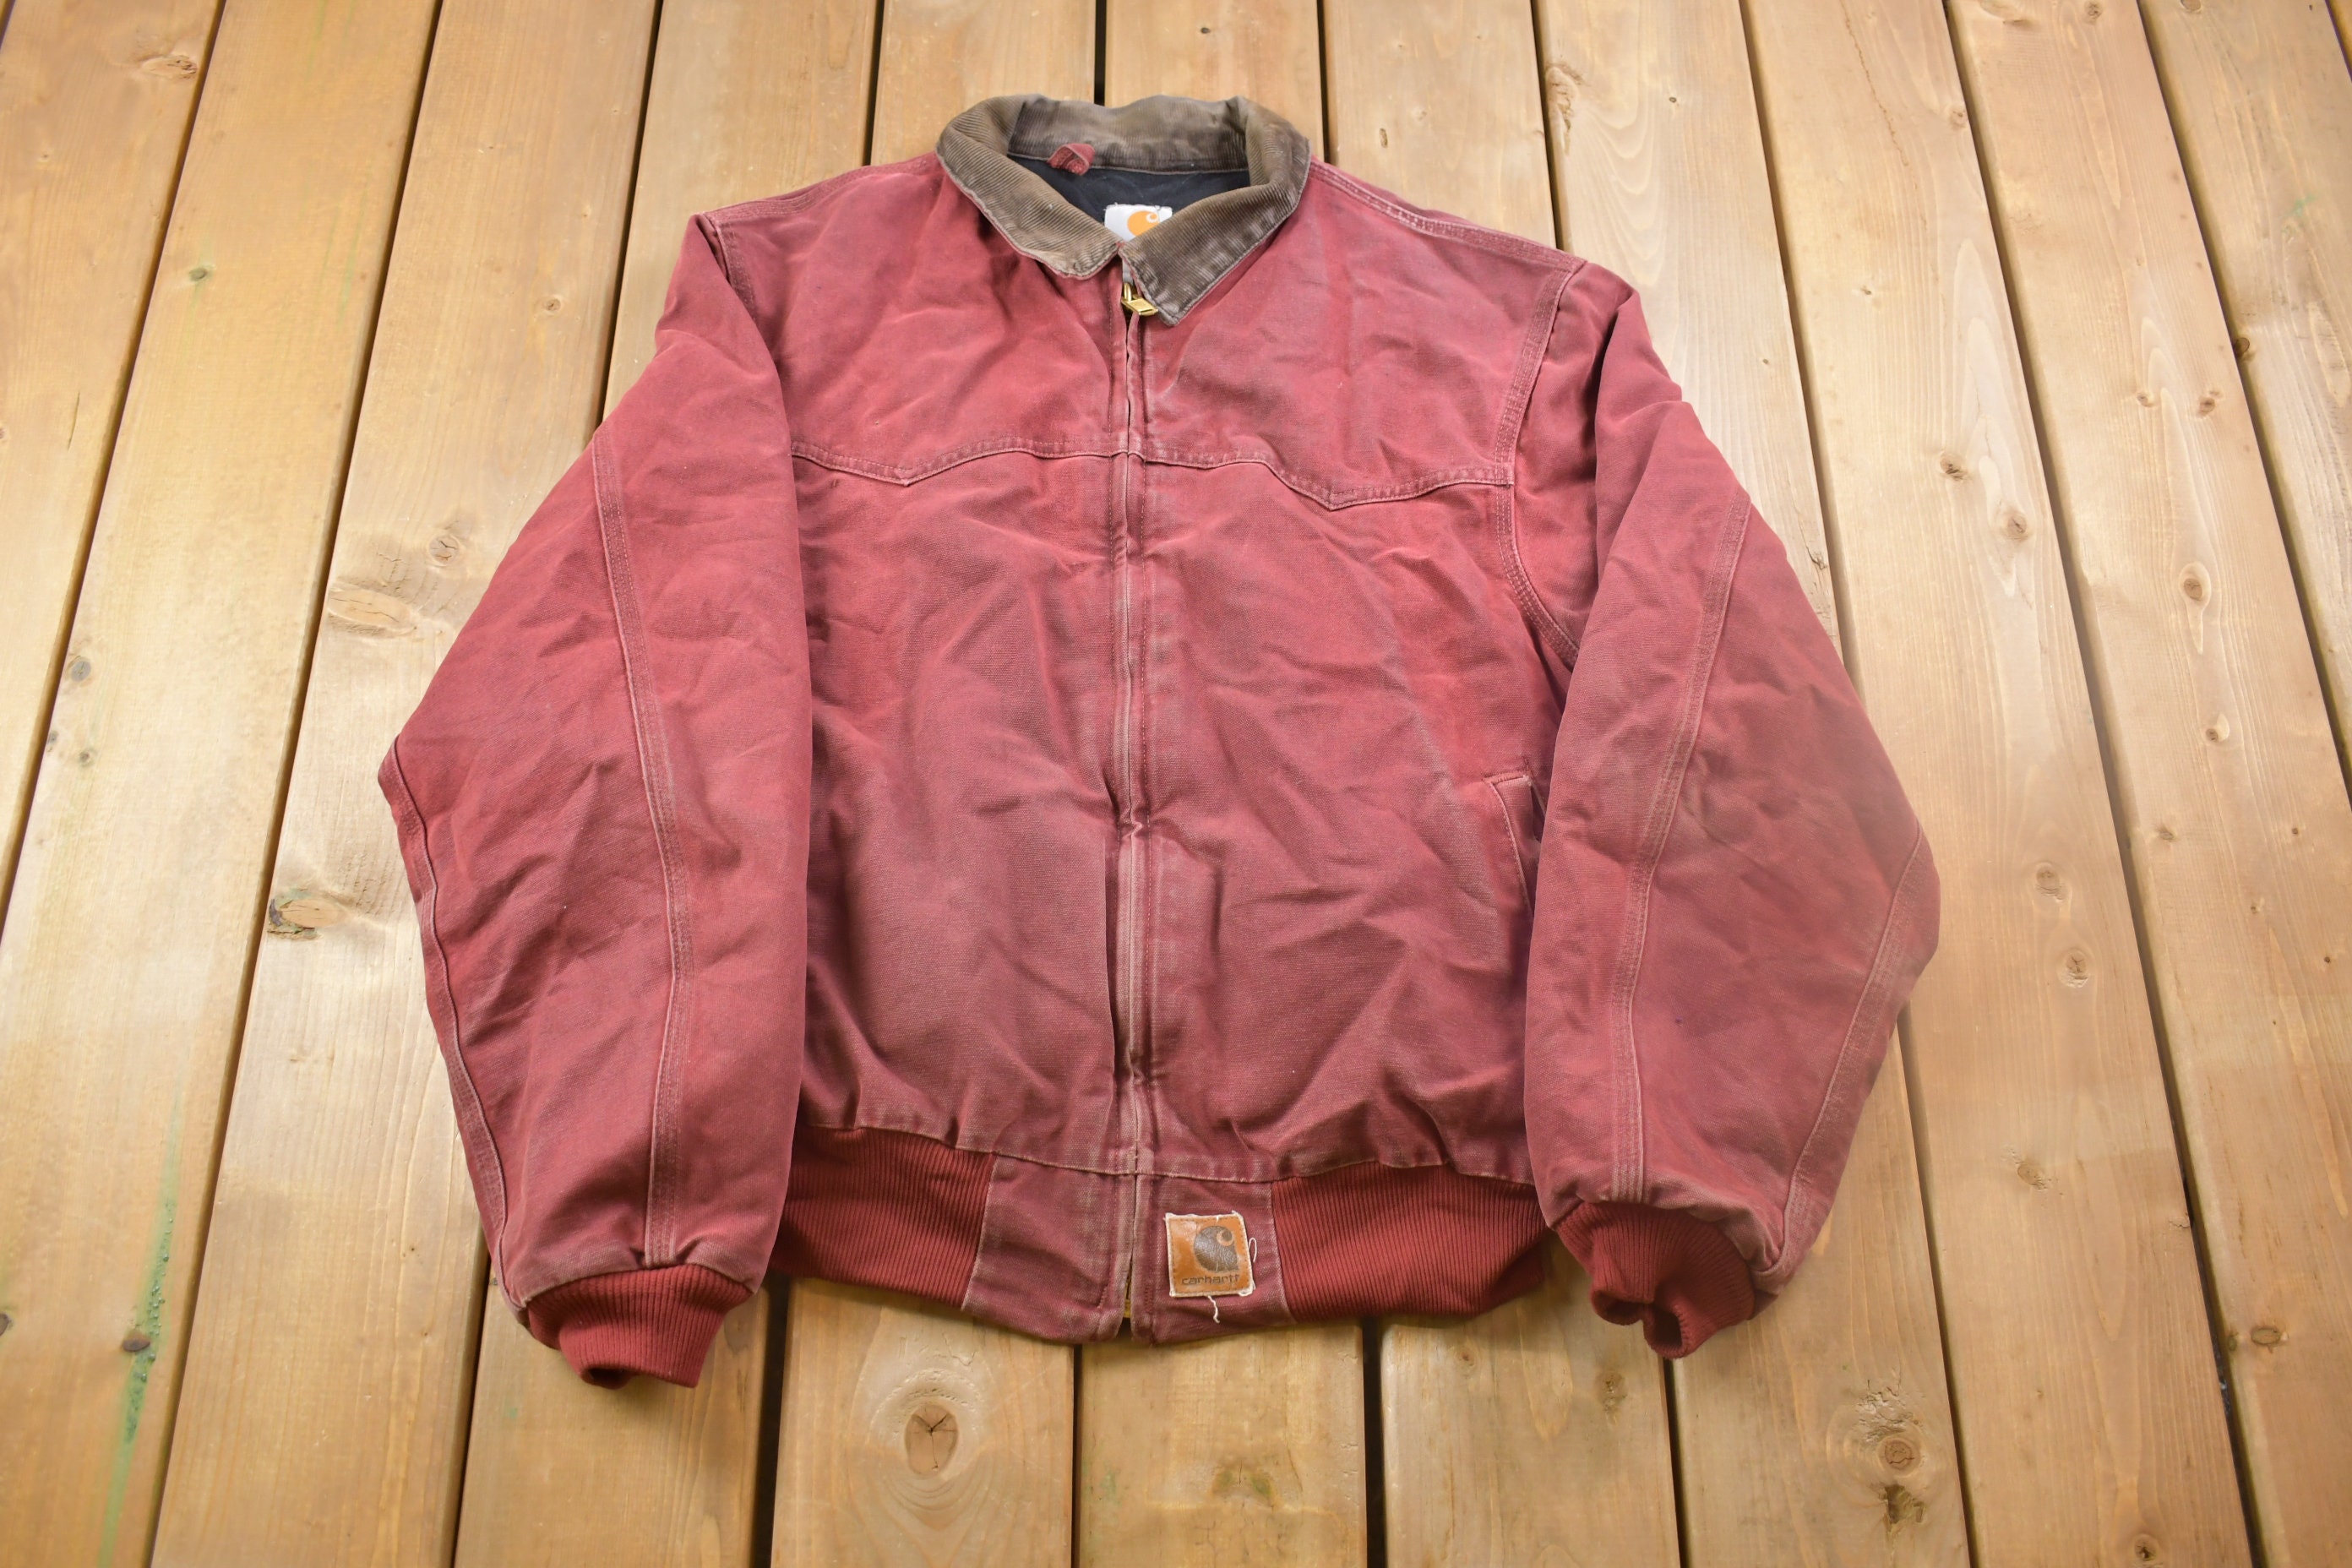 Vintage 1990s Carhartt Santa Fe Jacket / Workwear / Streetwear